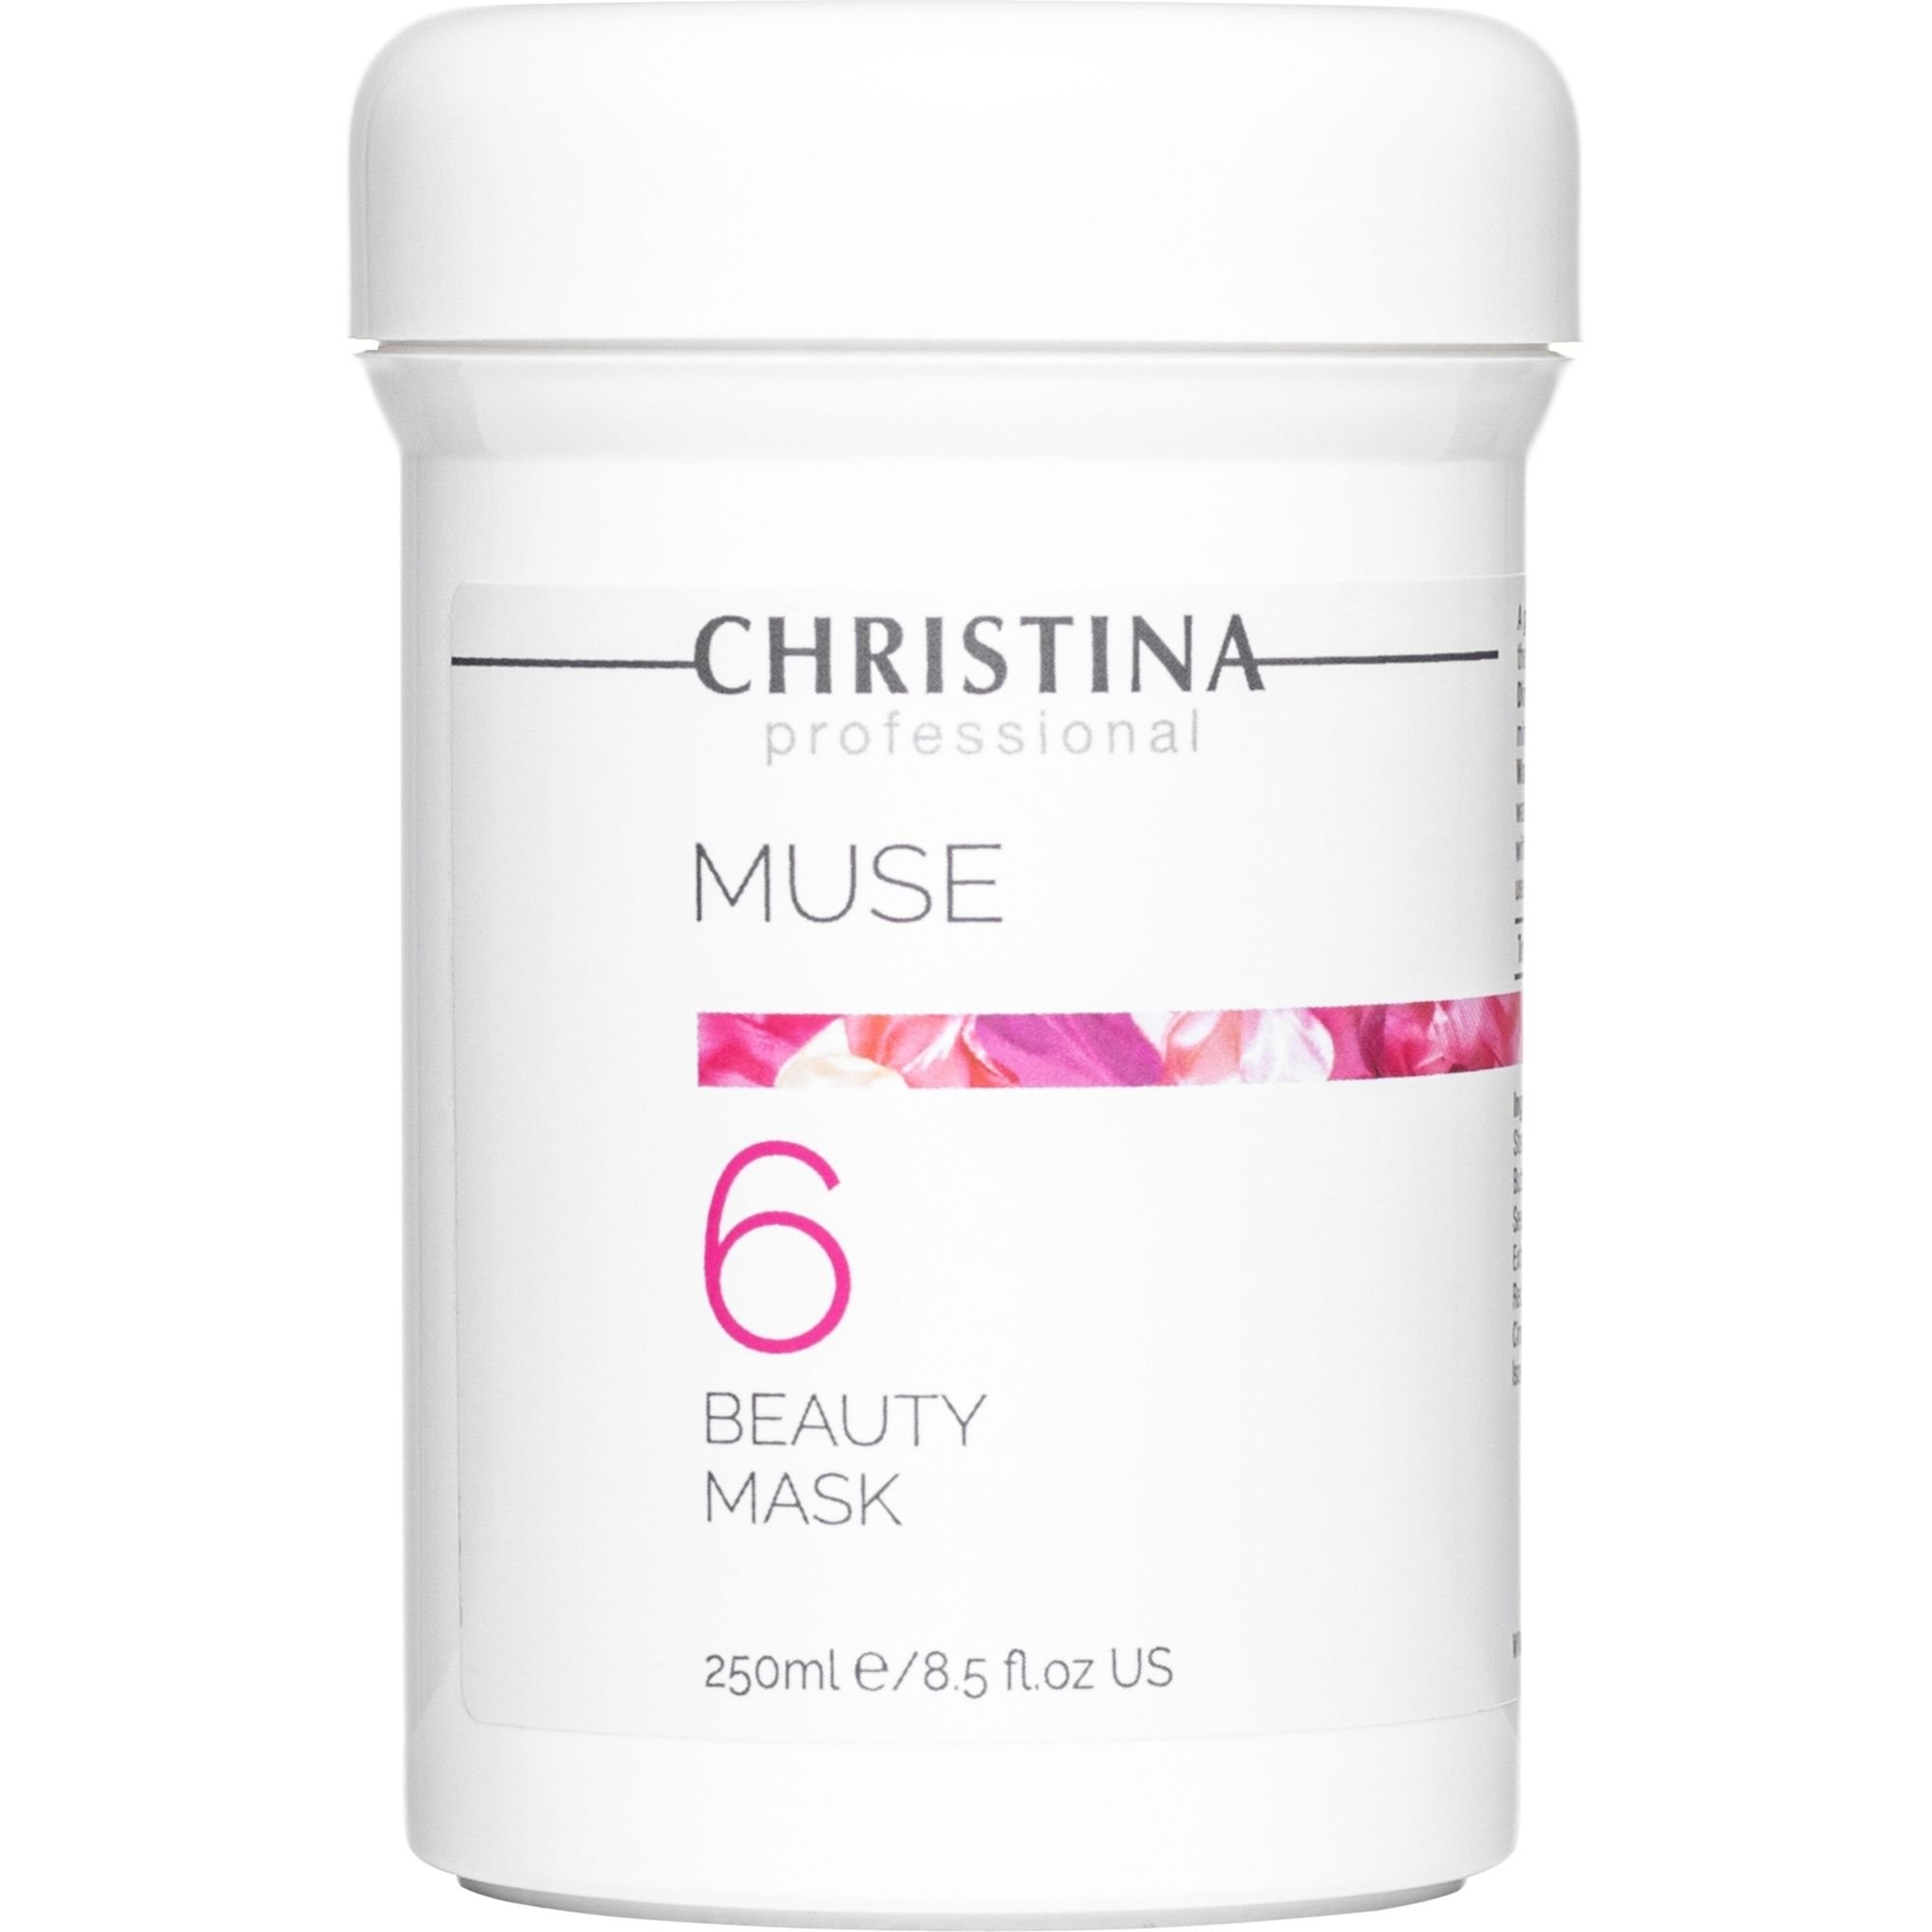 Маска краси Christina Muse Beauty Mask з екстрактом троянди 250 мл - фото 1